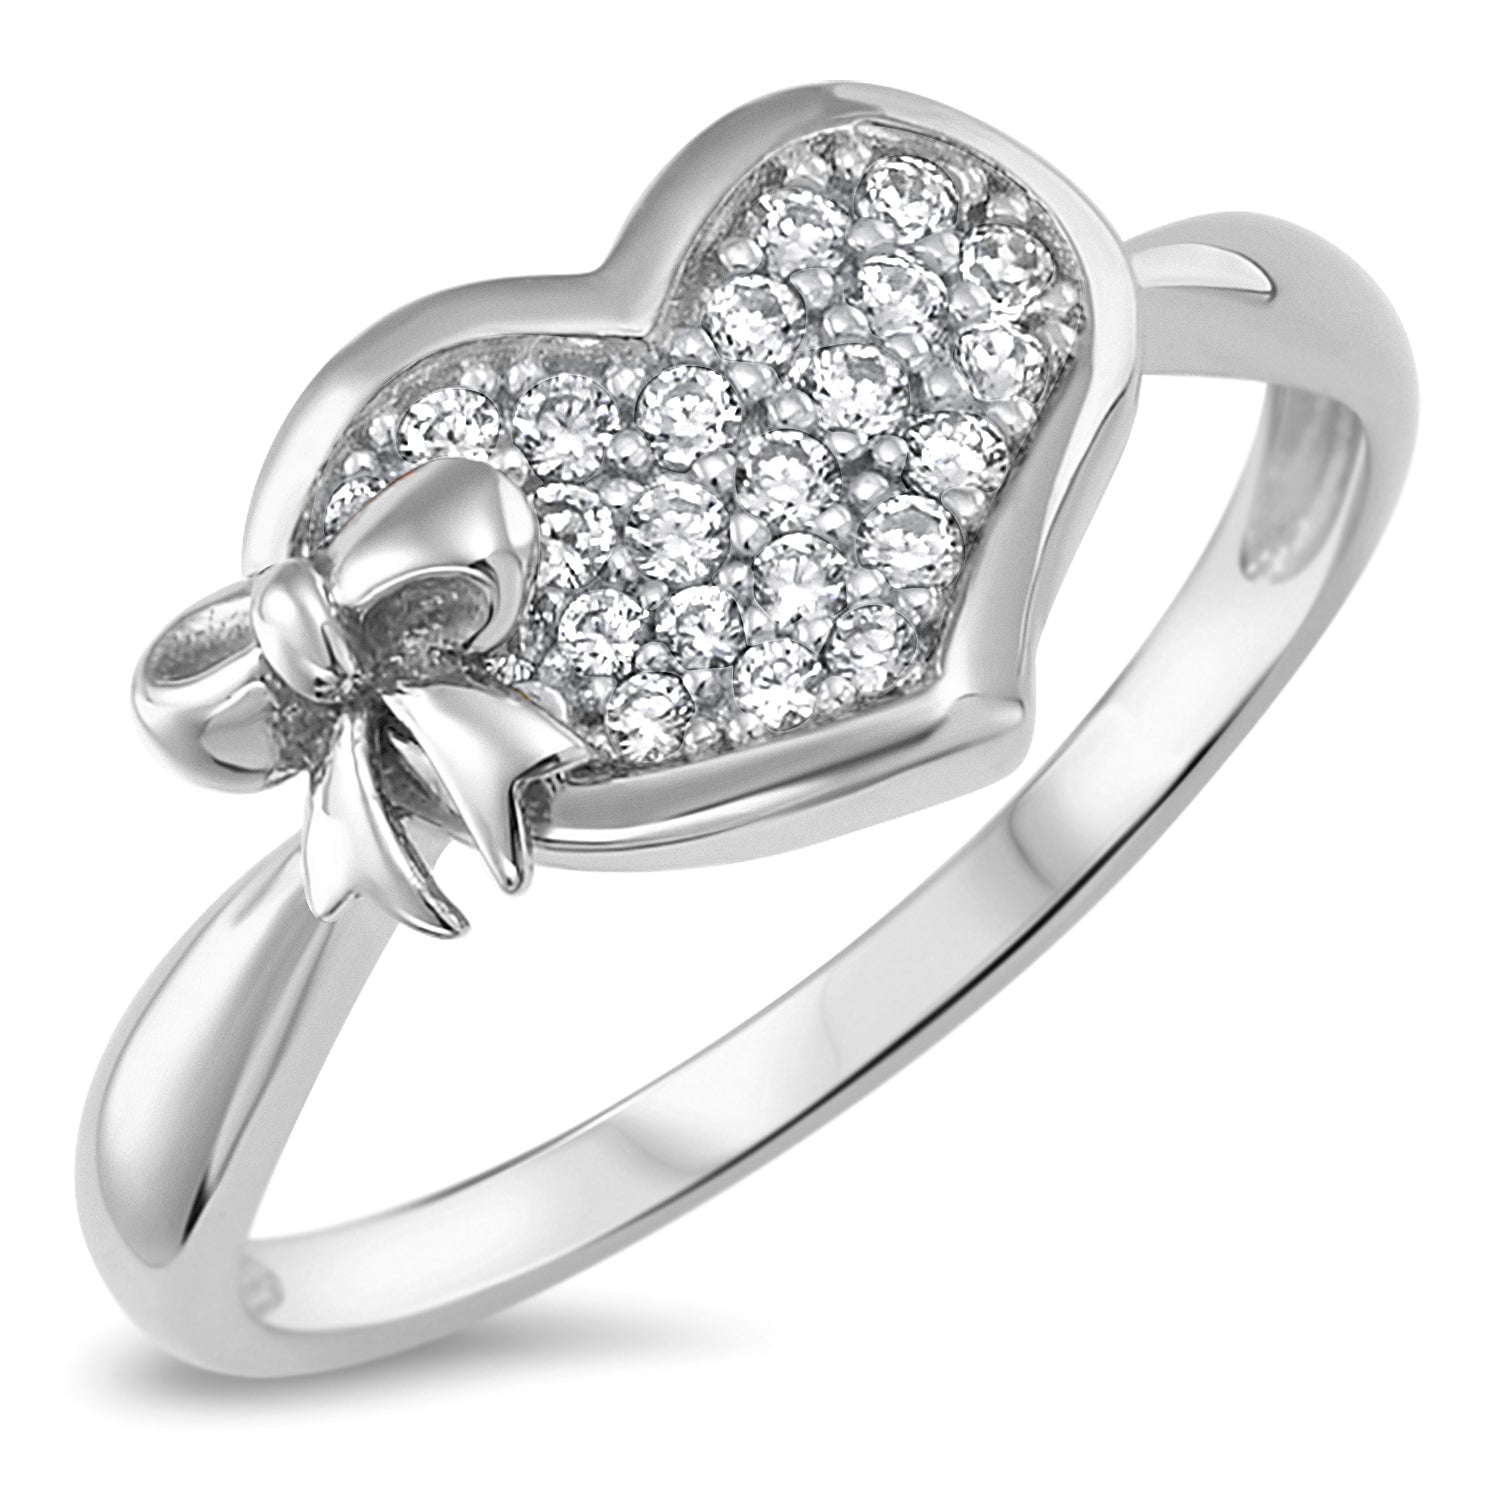 Garnet Ring/ Heart Shaped Garnet Ring/ Sterling Silver Garnet Ring/  Valentines Day Gift/ January Birthstone Ring/ Birthday Gift/ DaintyHeart